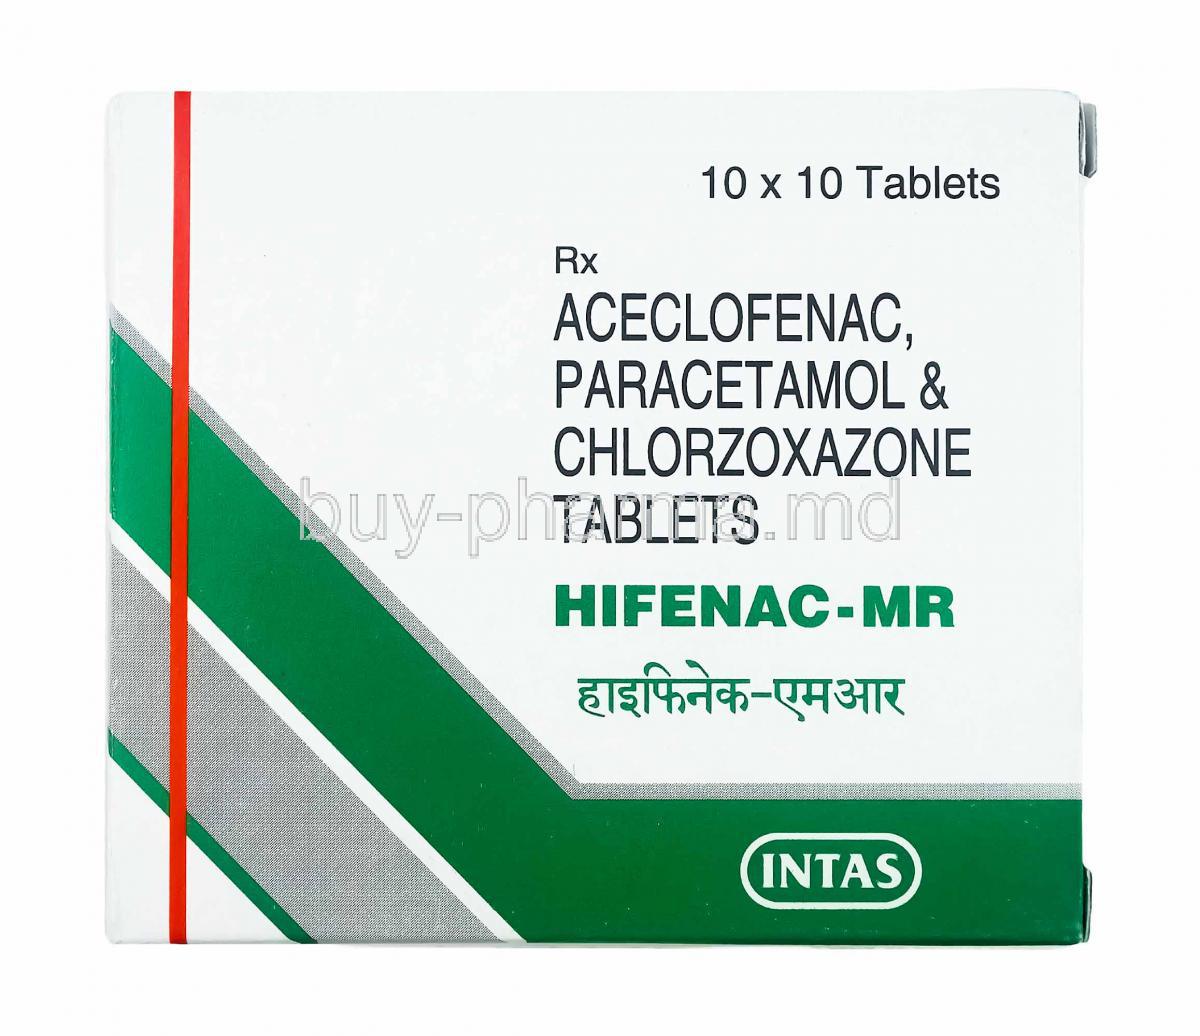 Hifenac-MR, Aceclofenac, Paracetamol and Chlorzoxazone